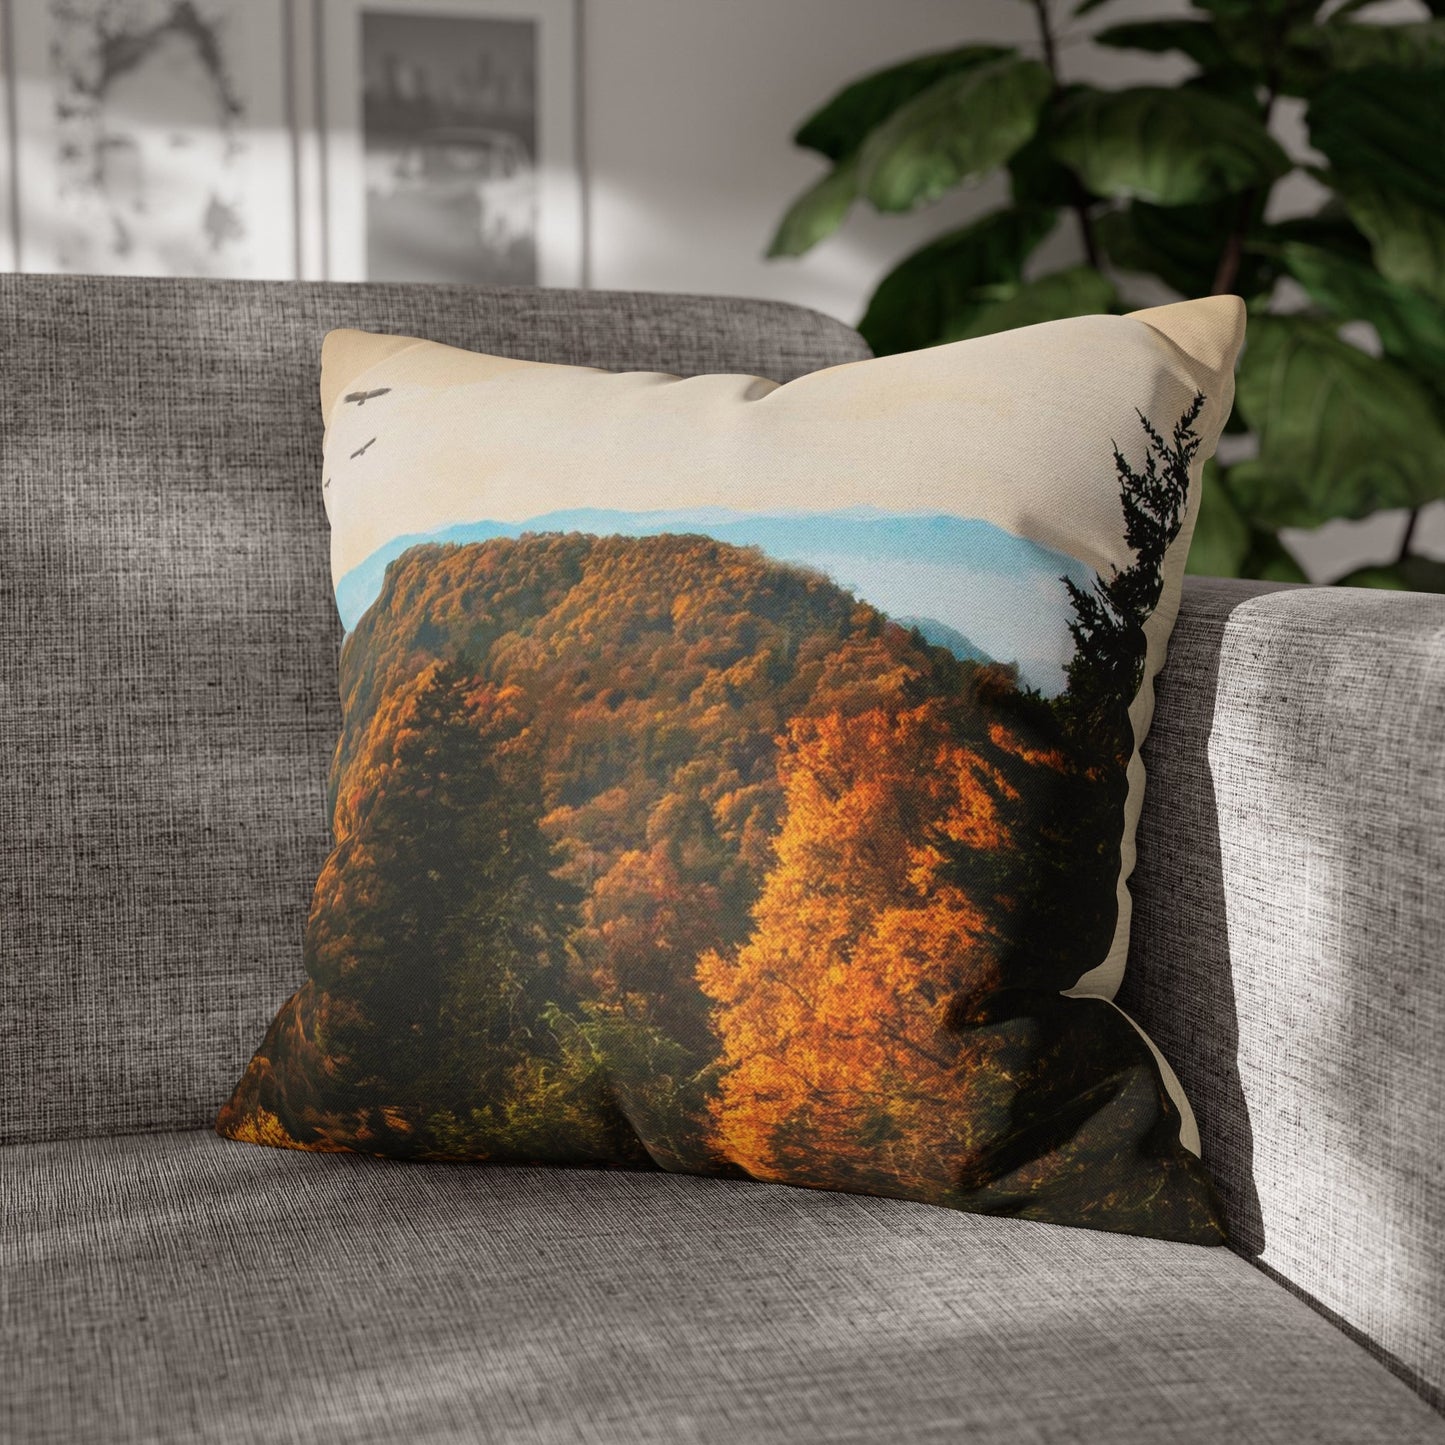 Great Smoky Mountains National Park Throw Pillow